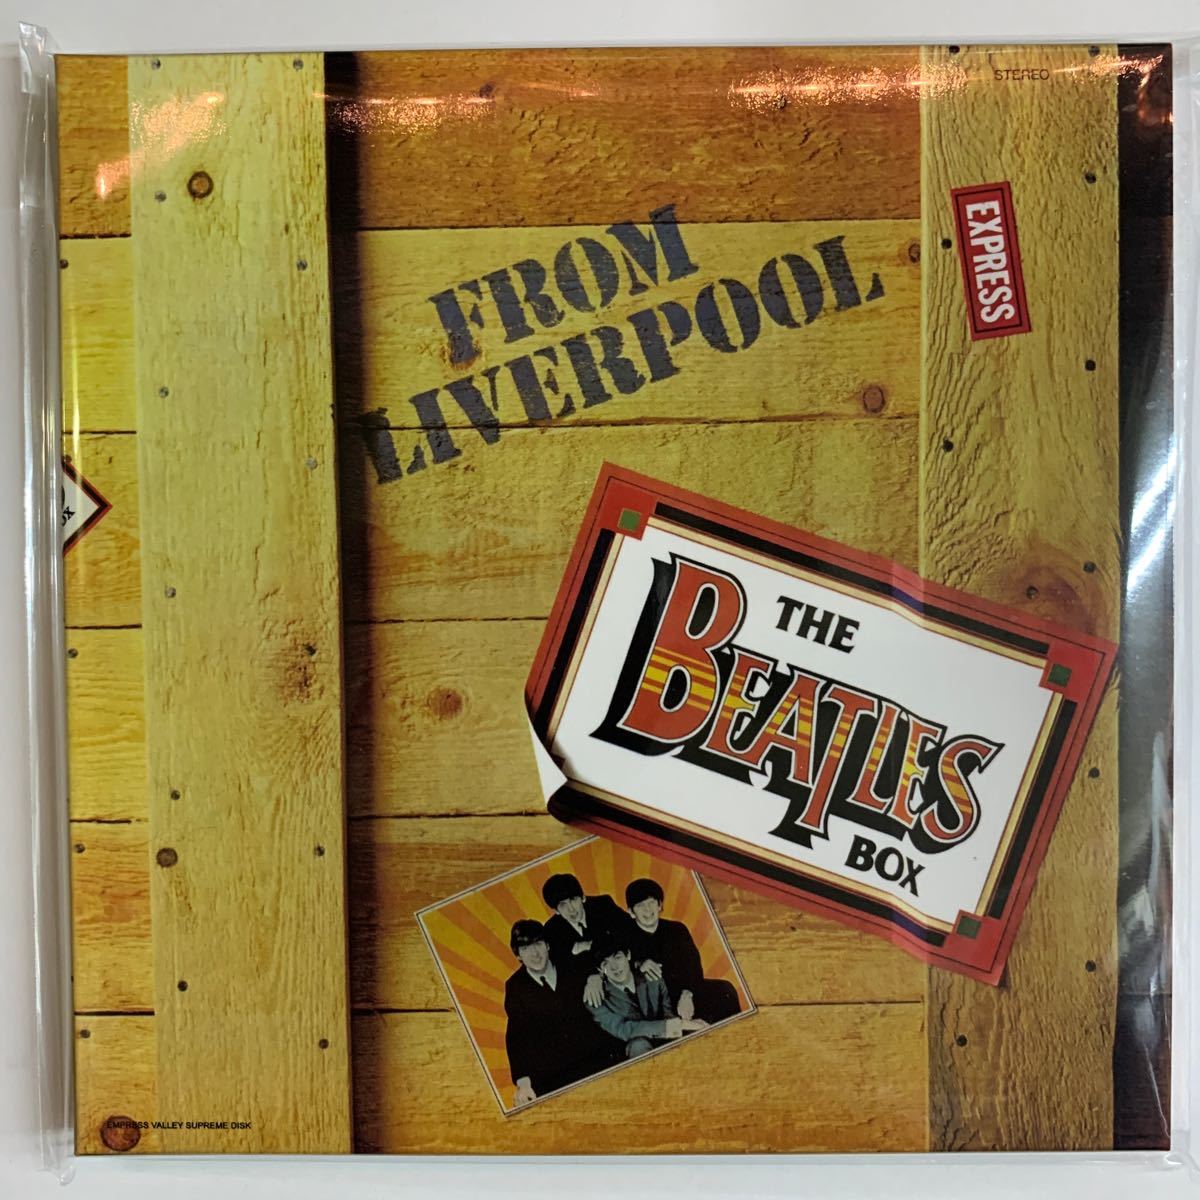 Yahoo!オークション -「ビートルズ cd box」(THE BEATLES) (Beatles